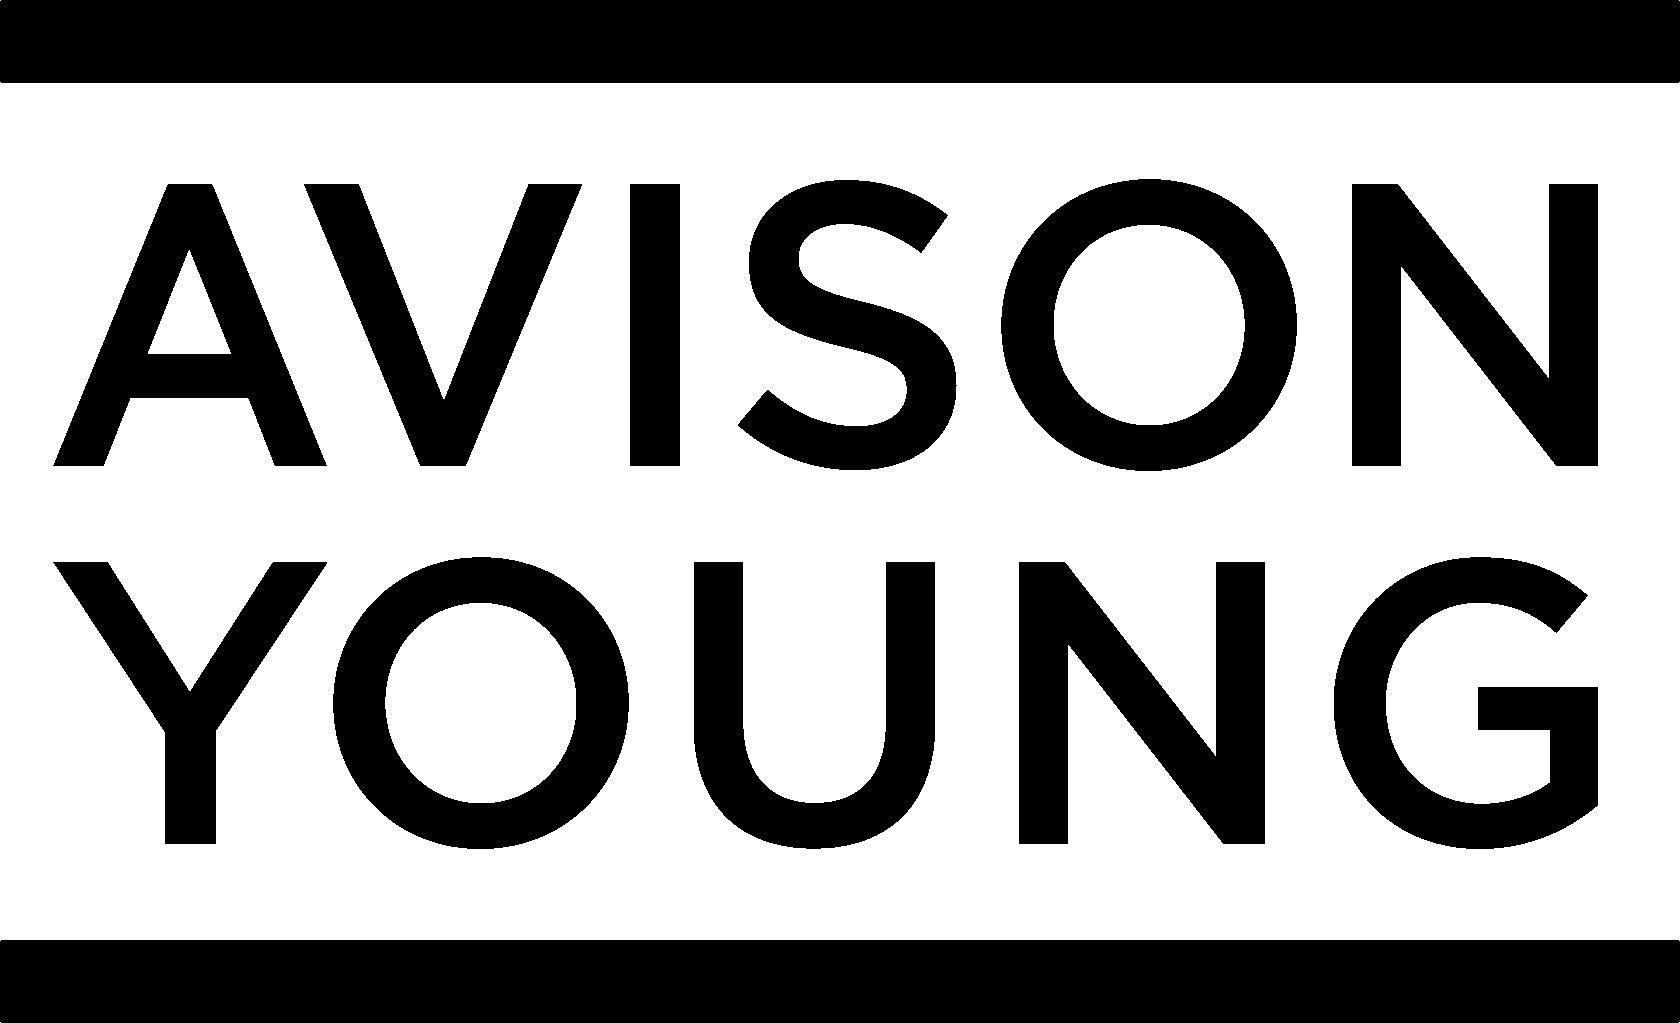 Young uk. Ависон. Avison logo. Зе Айл логотип. Ay logo.